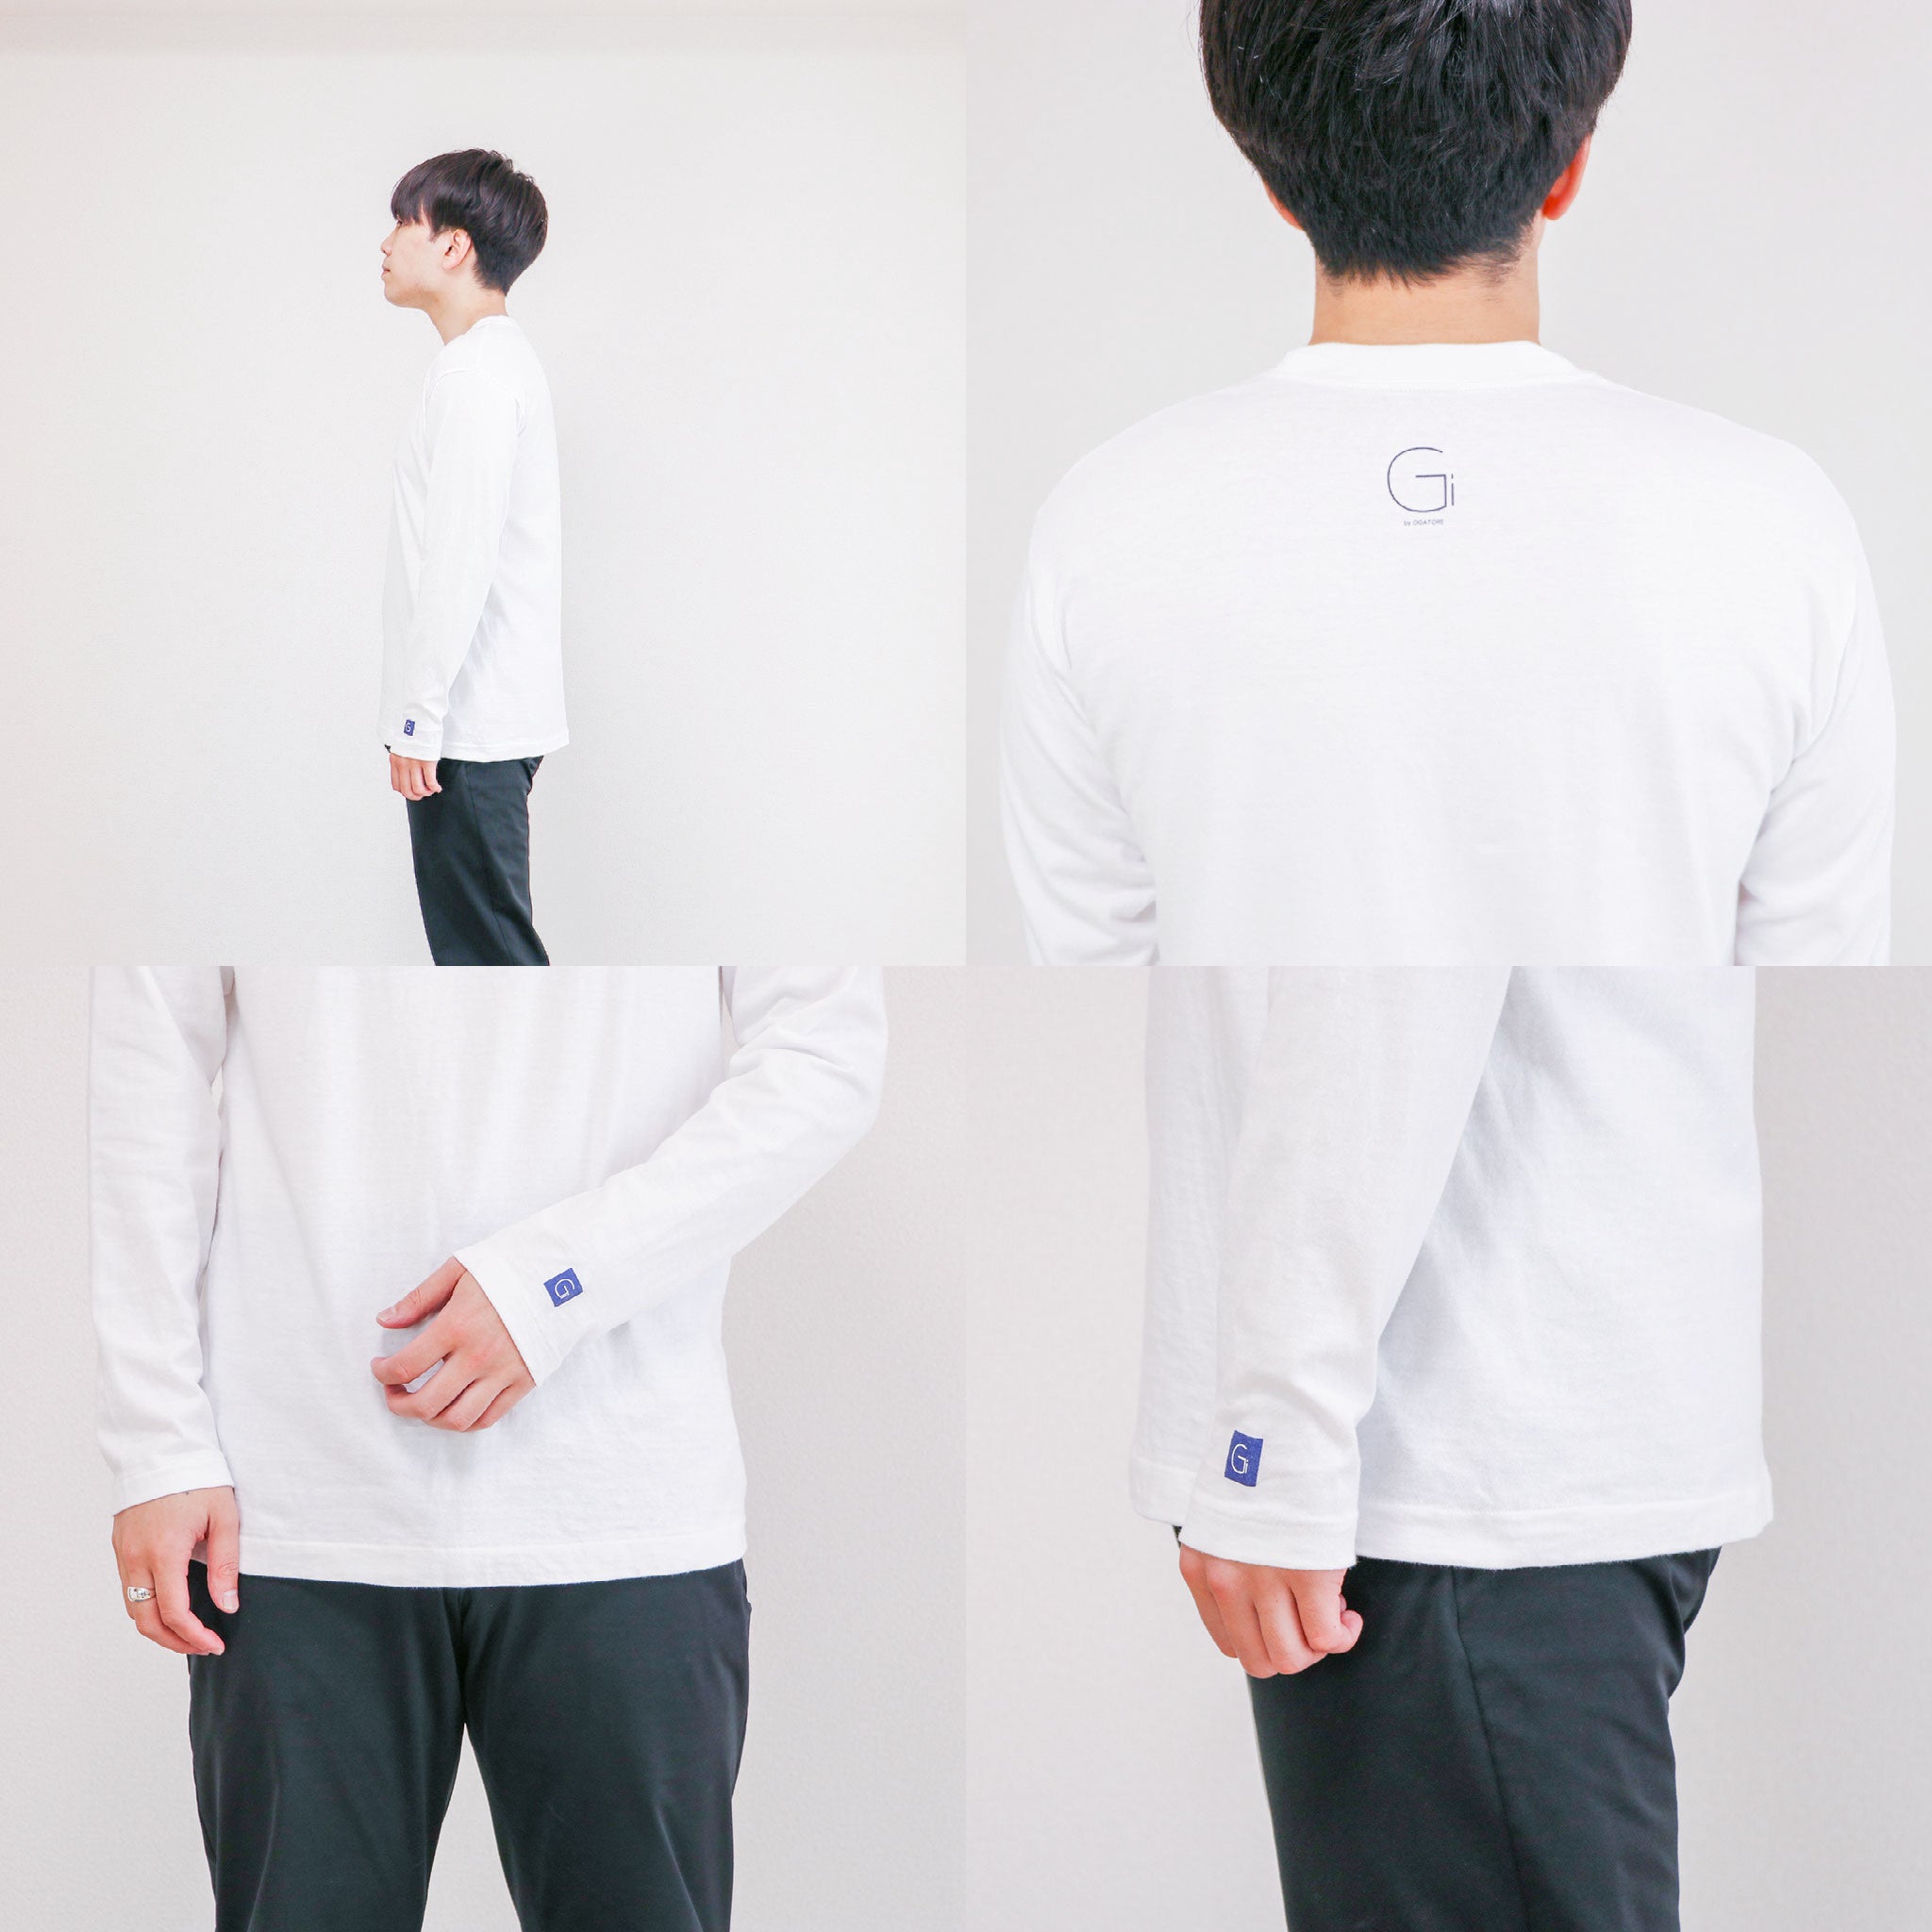 Gi 長袖Tシャツ ロンT 日本製 White 綿100% 国産 在庫限り